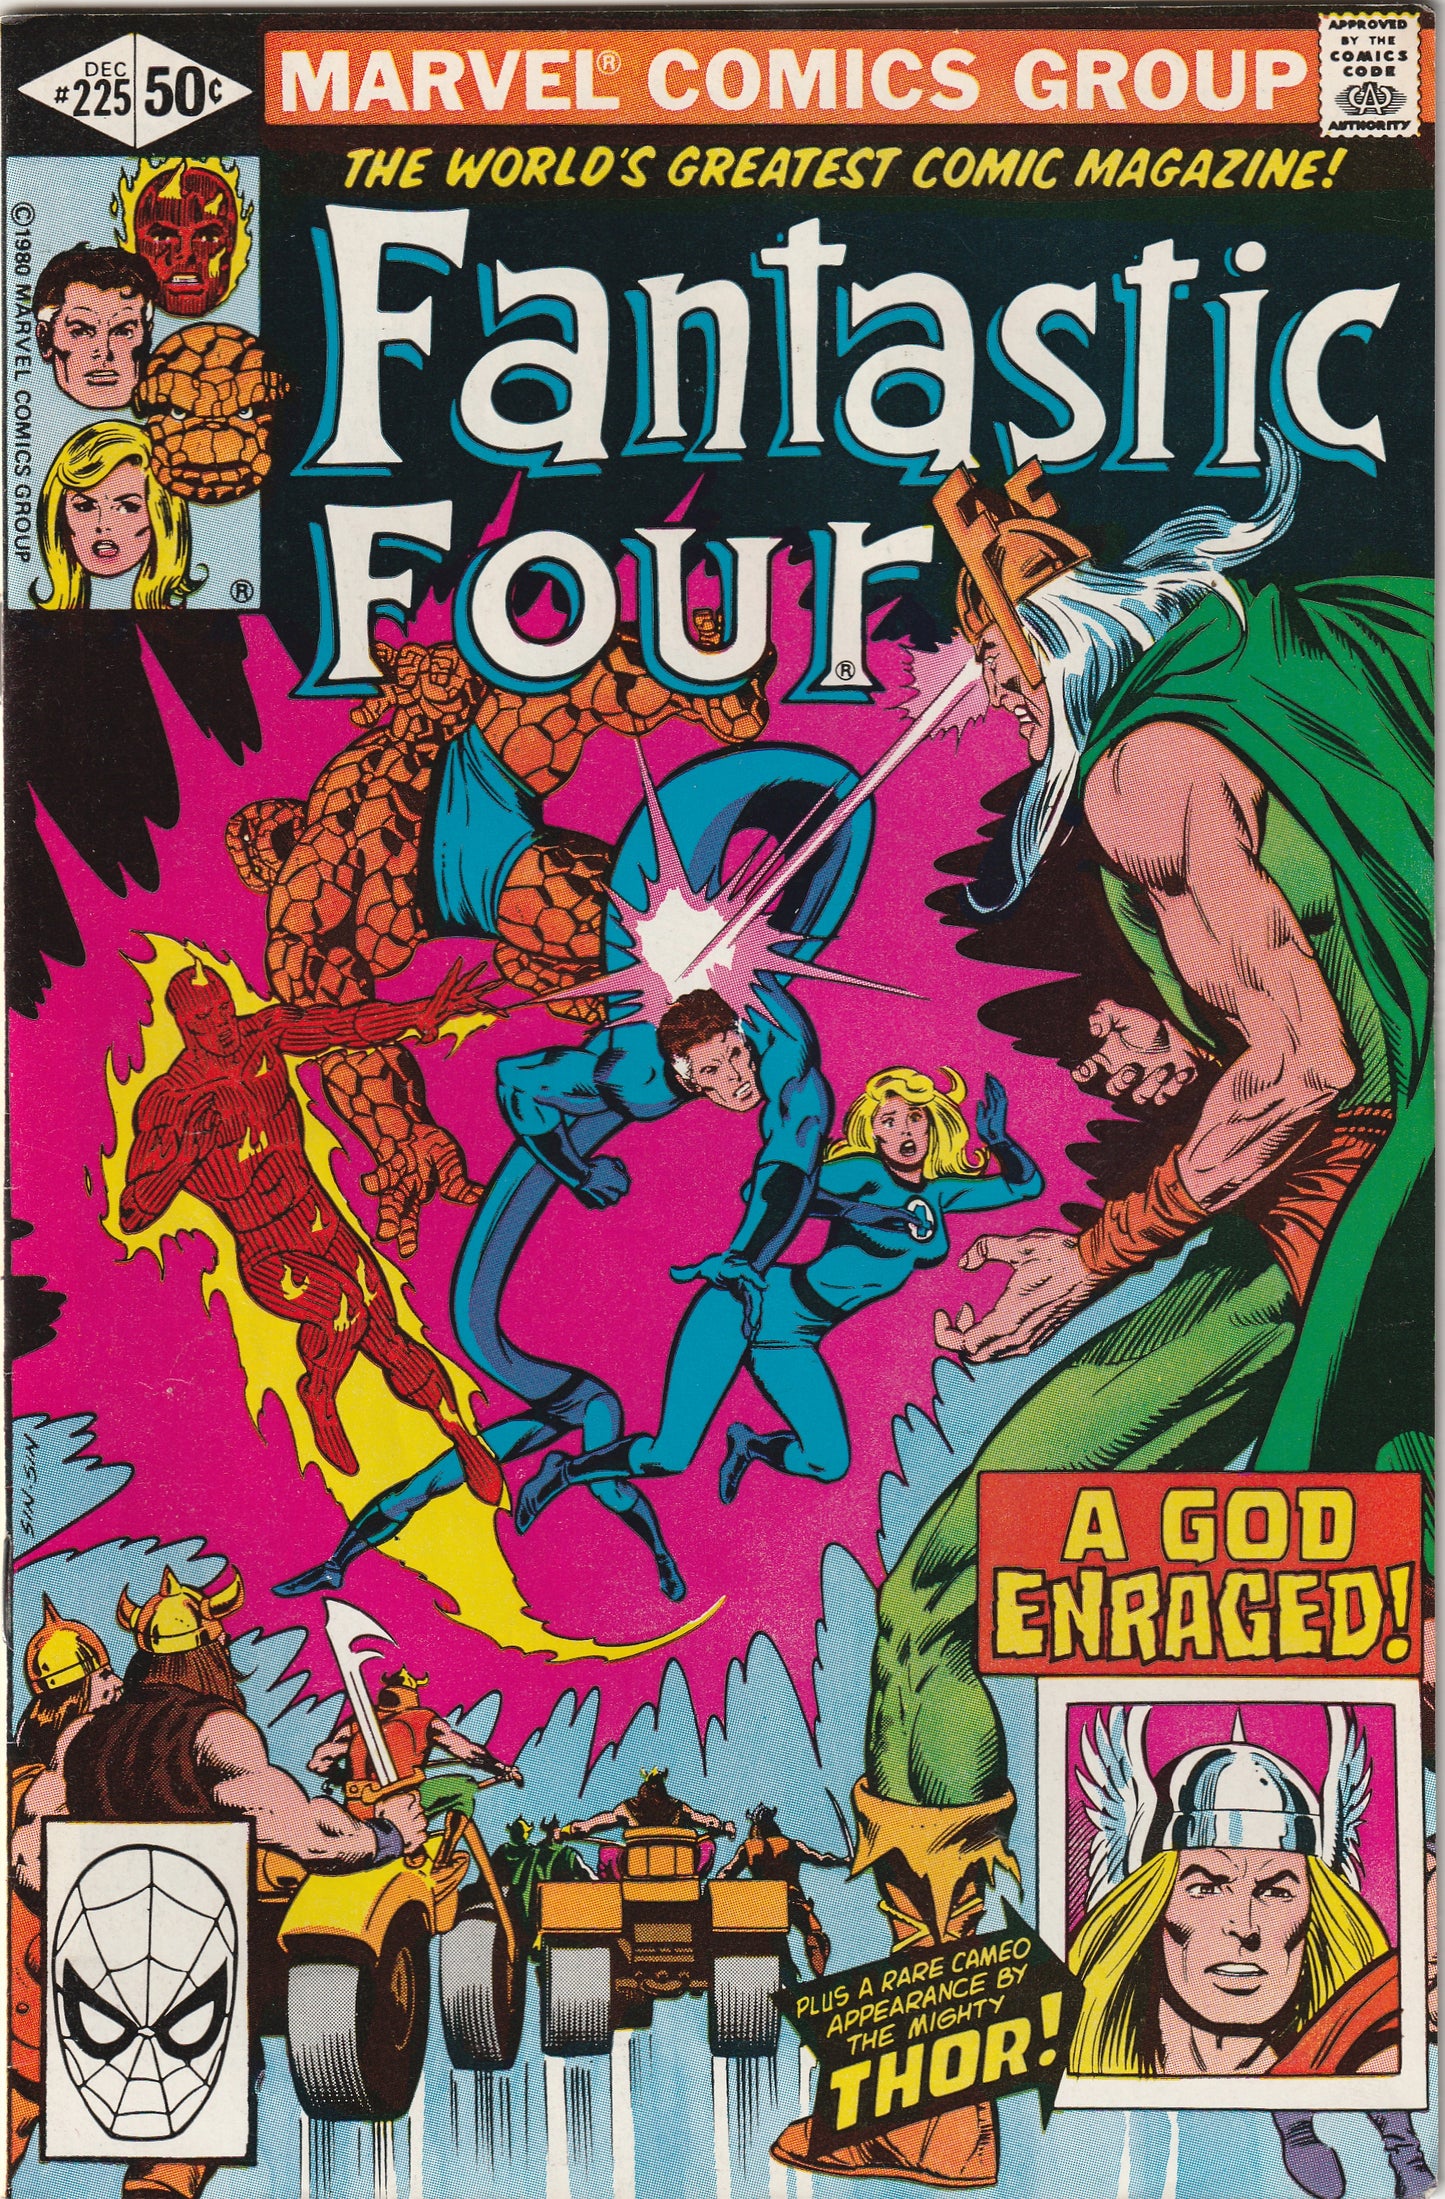 Fantastic Four #225 (1980)